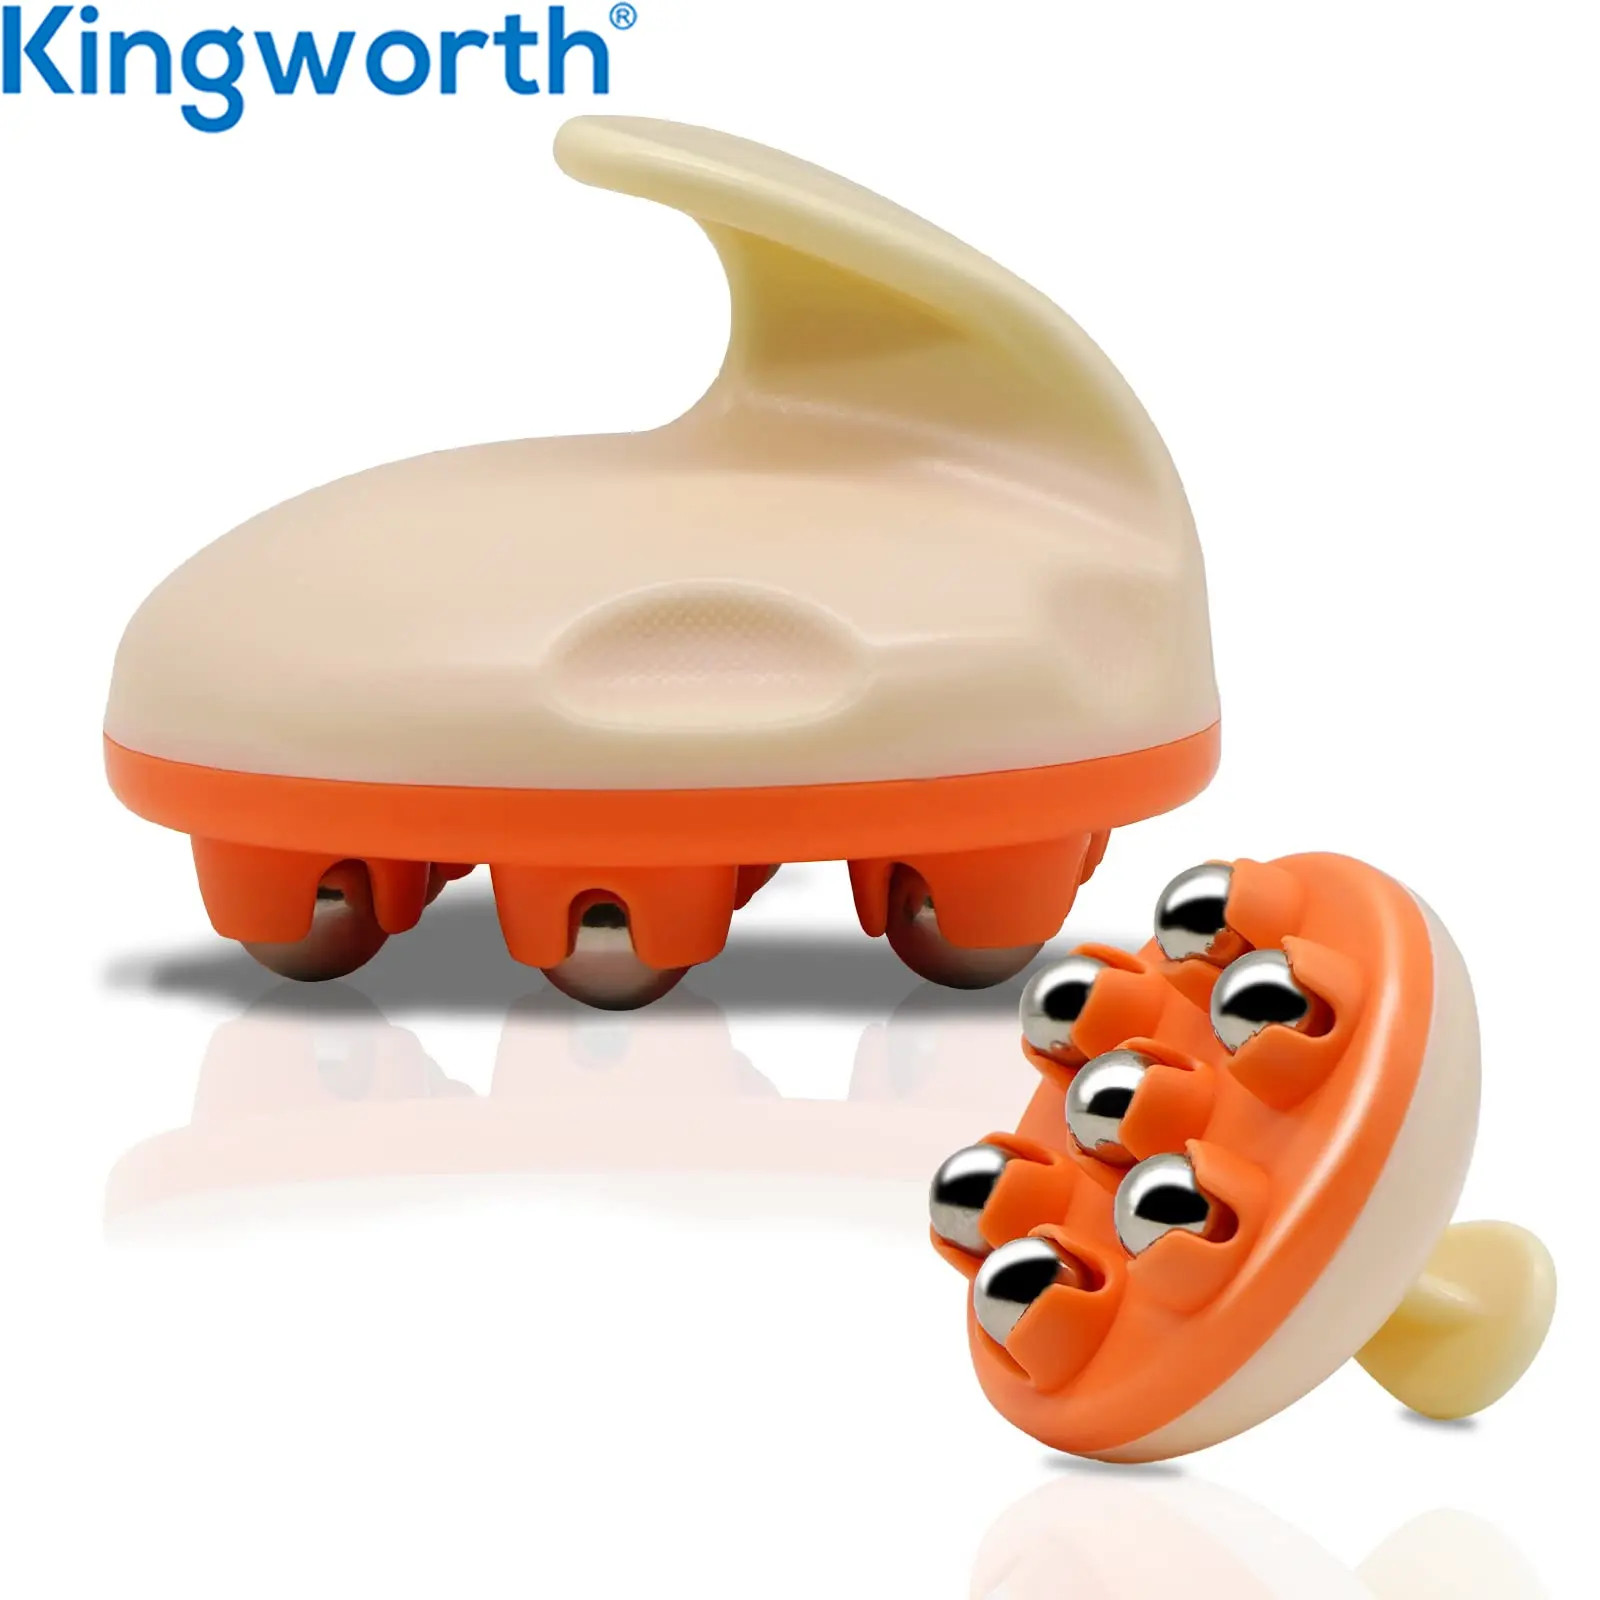 Kingworth 7 360-Degree Metal Roller Body Pain Relief Cellulite Massage Hand Roller Massager